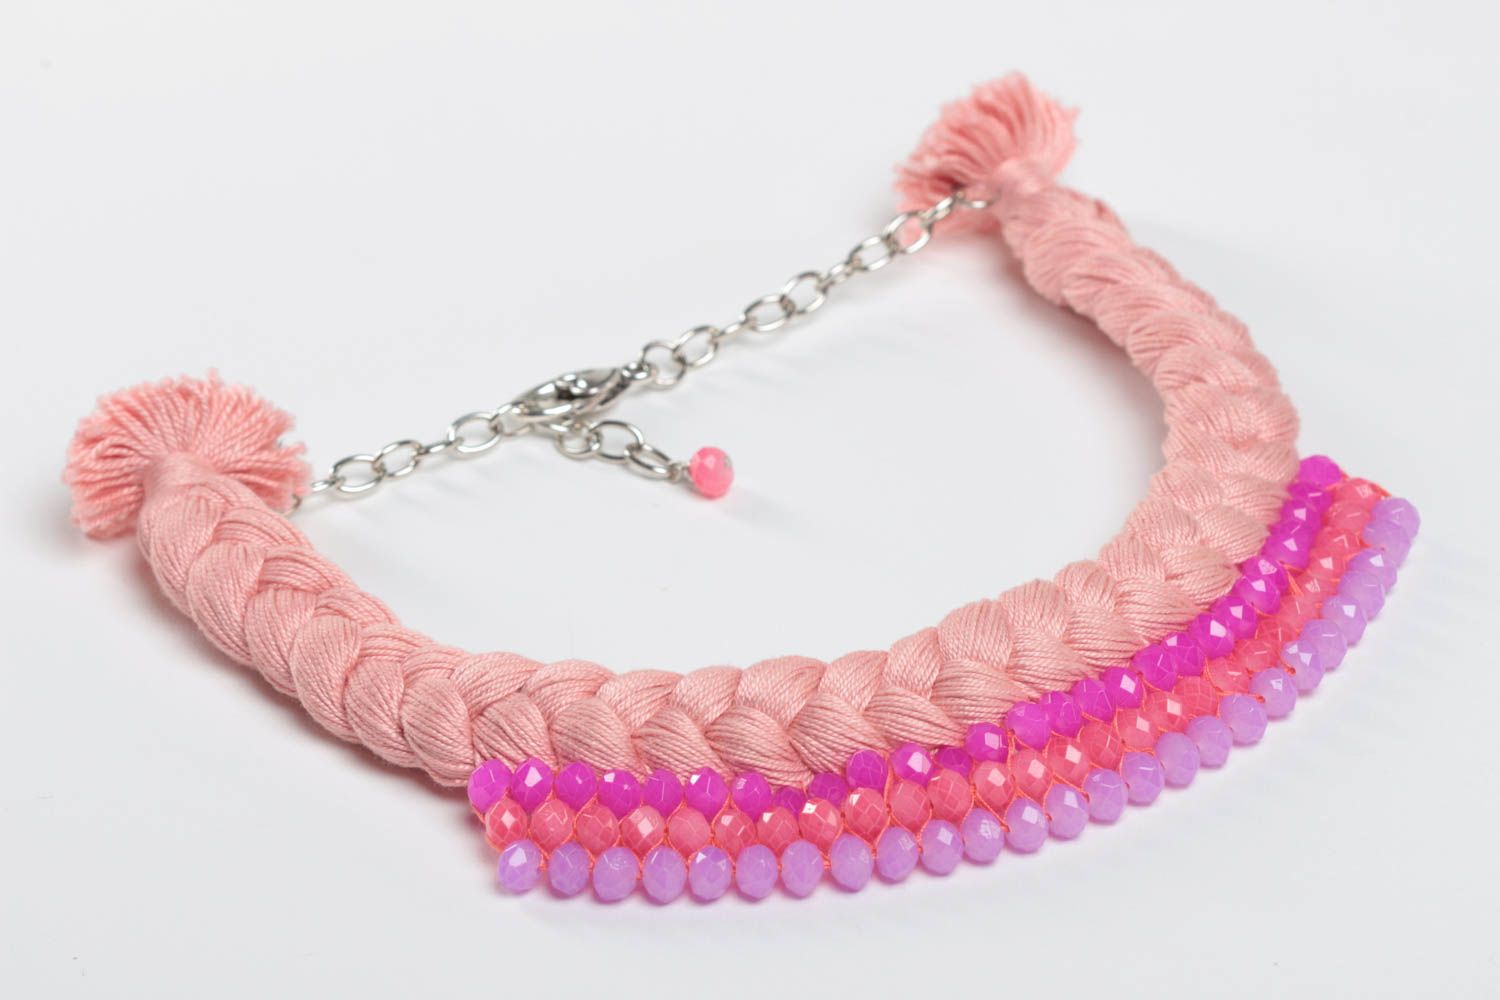 Handmade neckalce designer accessory gift ideas unusual jewelry gift for her photo 2